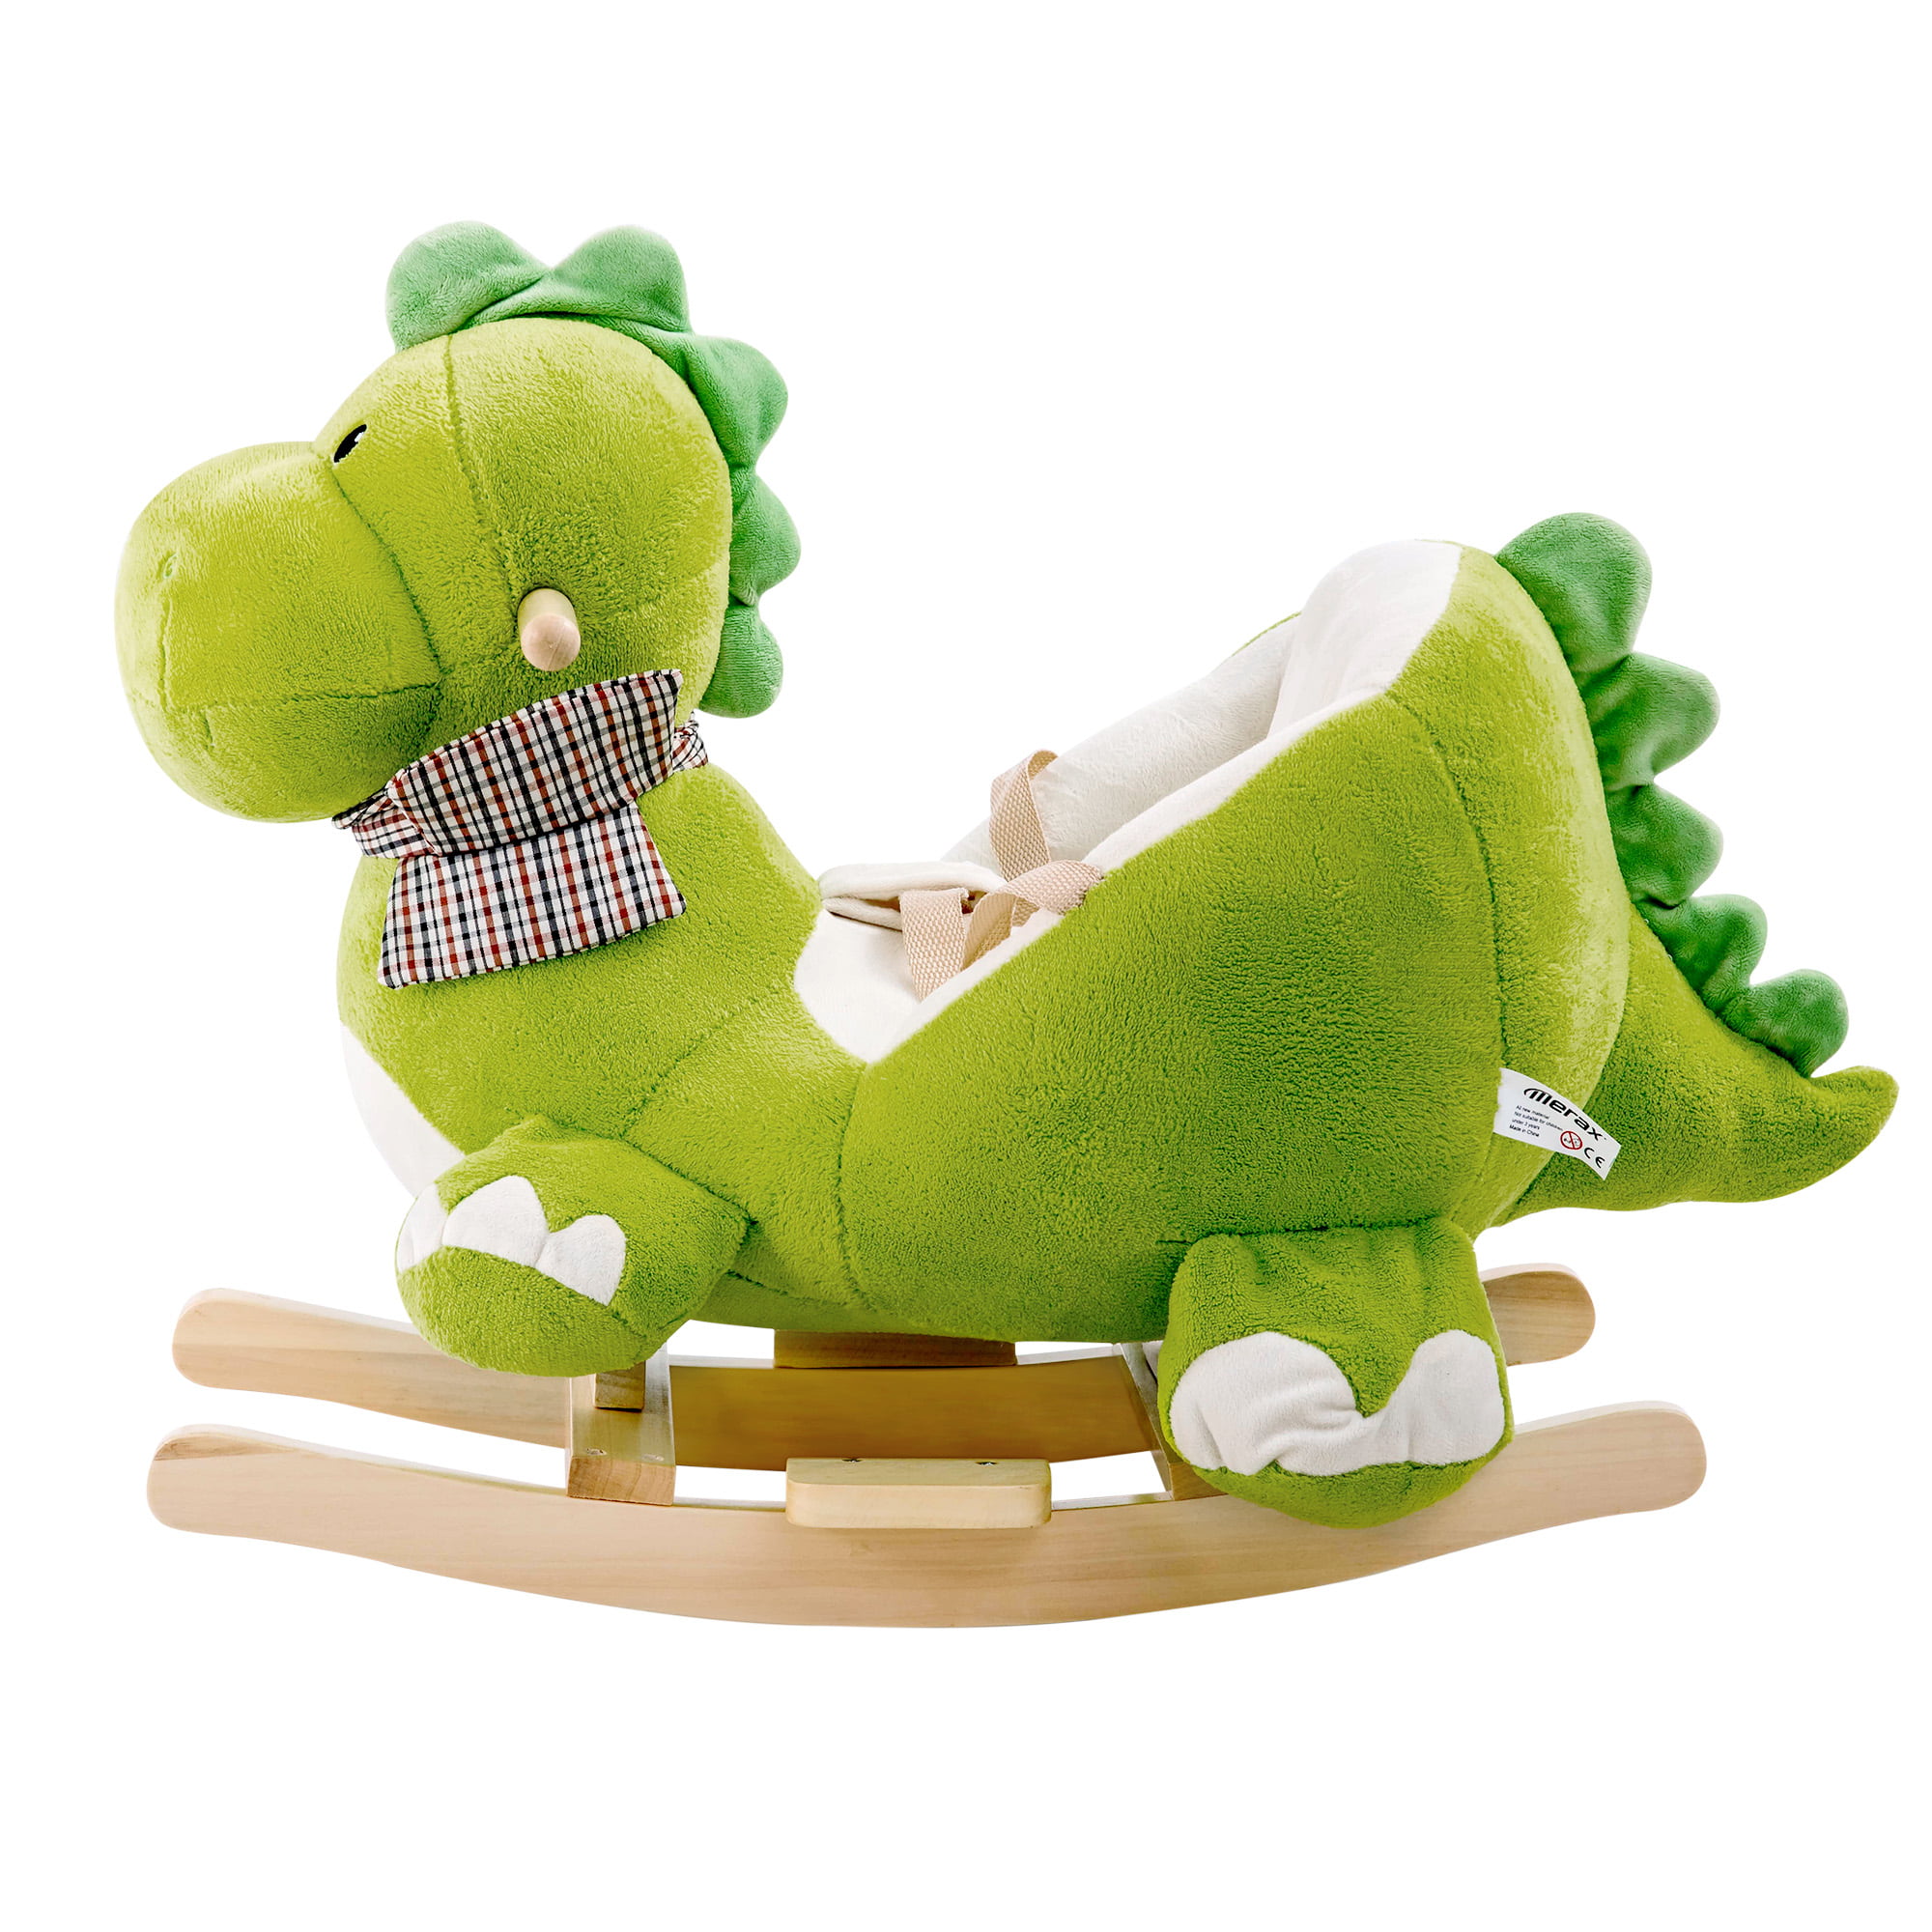 Stuffed Animal Rocker Child/Toddlers Rocking Toy Kids Birthday Gift Dinosaur Ride On Toy Green Dinosaur P PURLOVE Rocking Horse Toy Plush Ride-On Rocker w/ Seat Belt